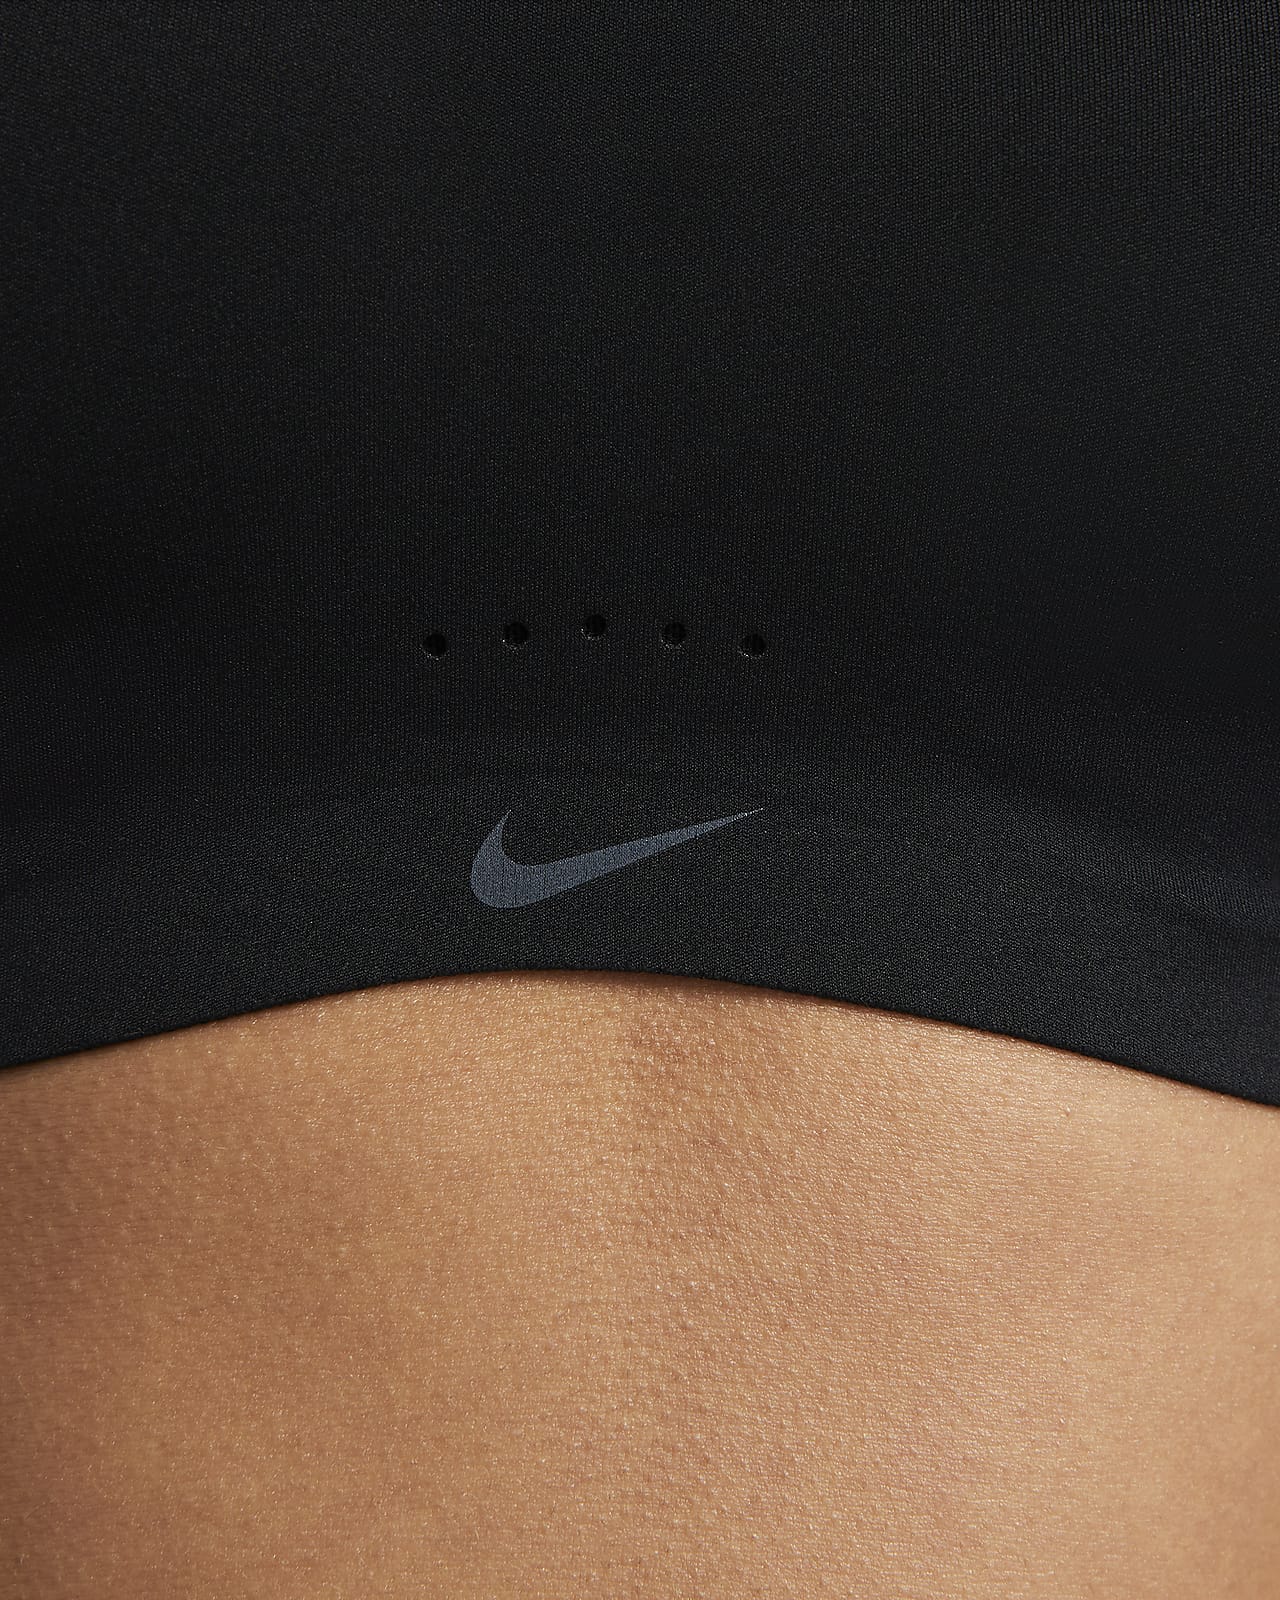 Nike Alate Coverage Women's Light-Support Padded Sports Bra. Nike.com